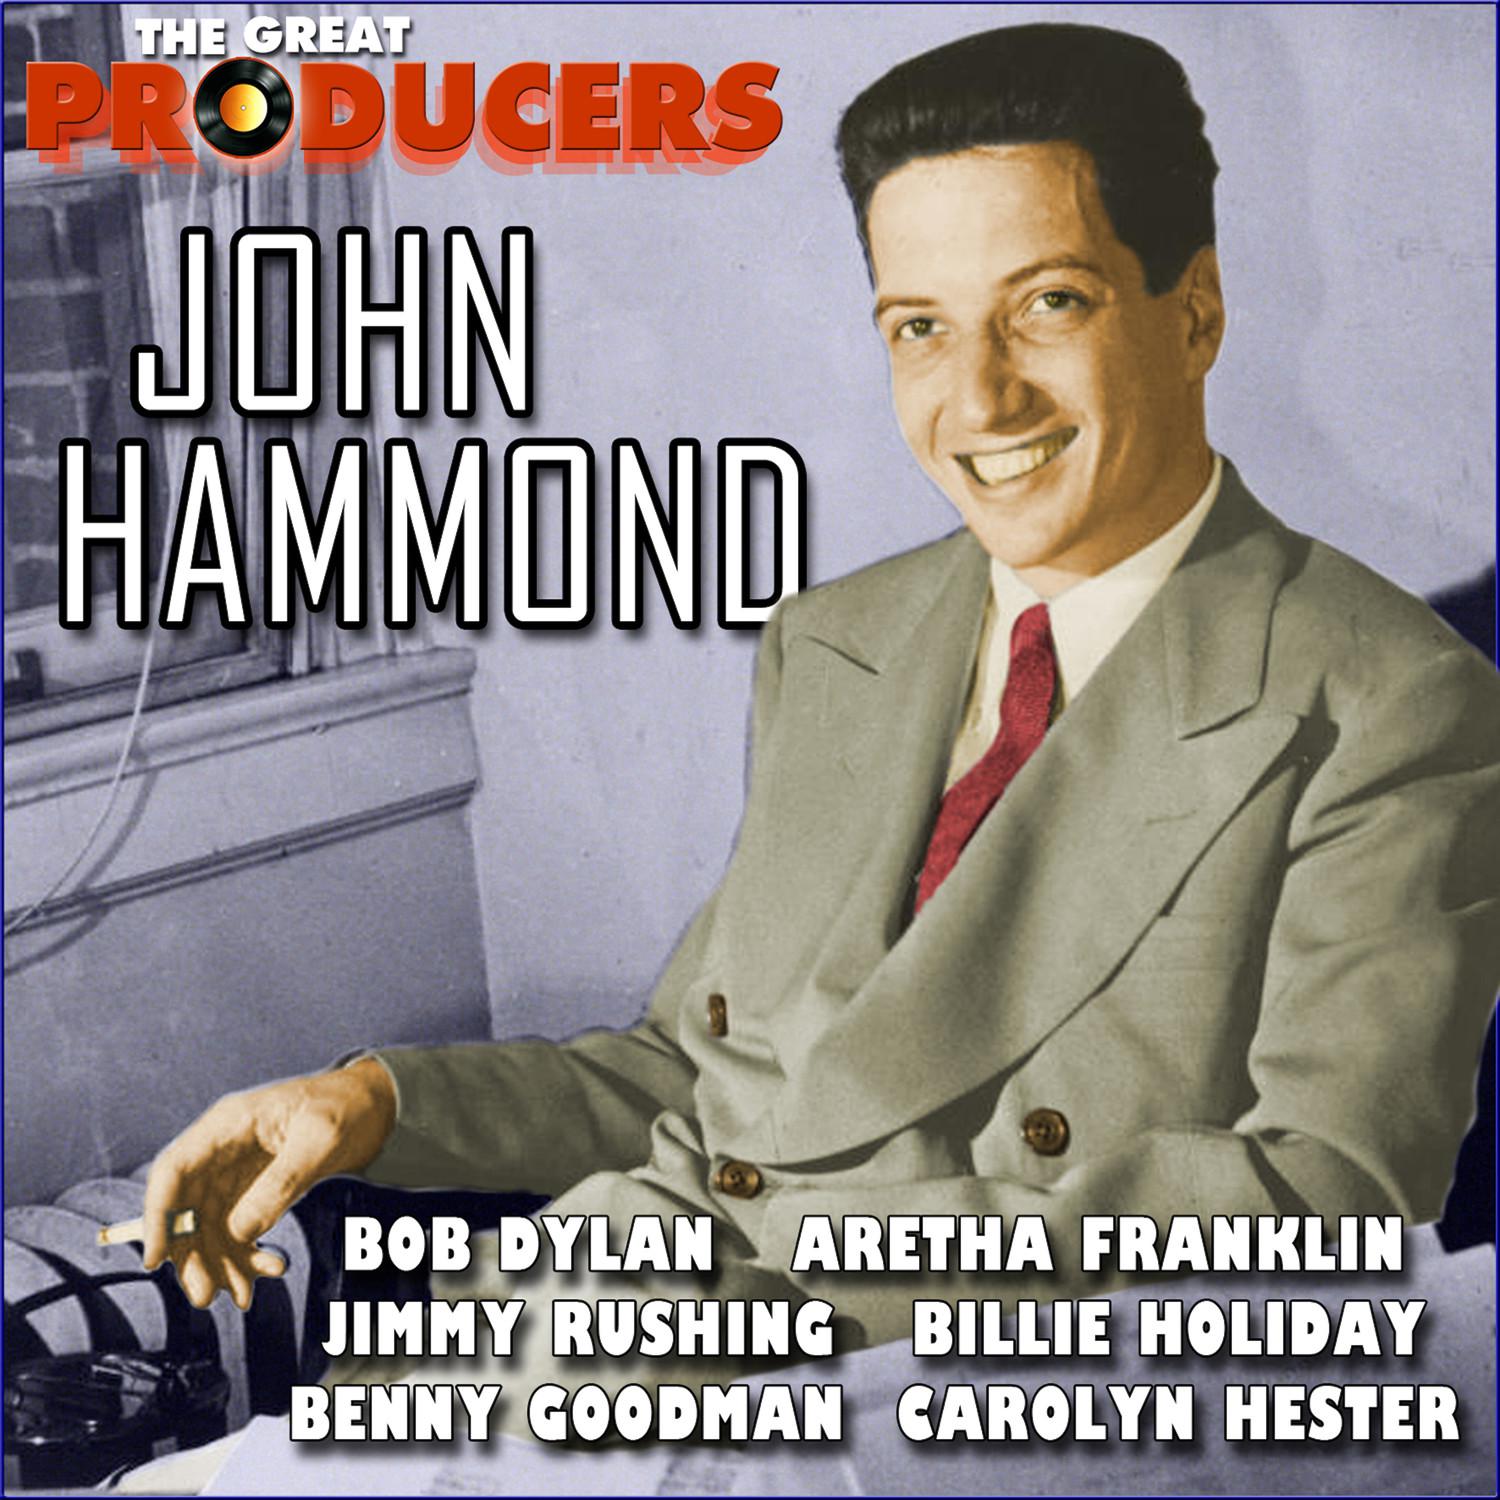 The Great Producers - John Hammond